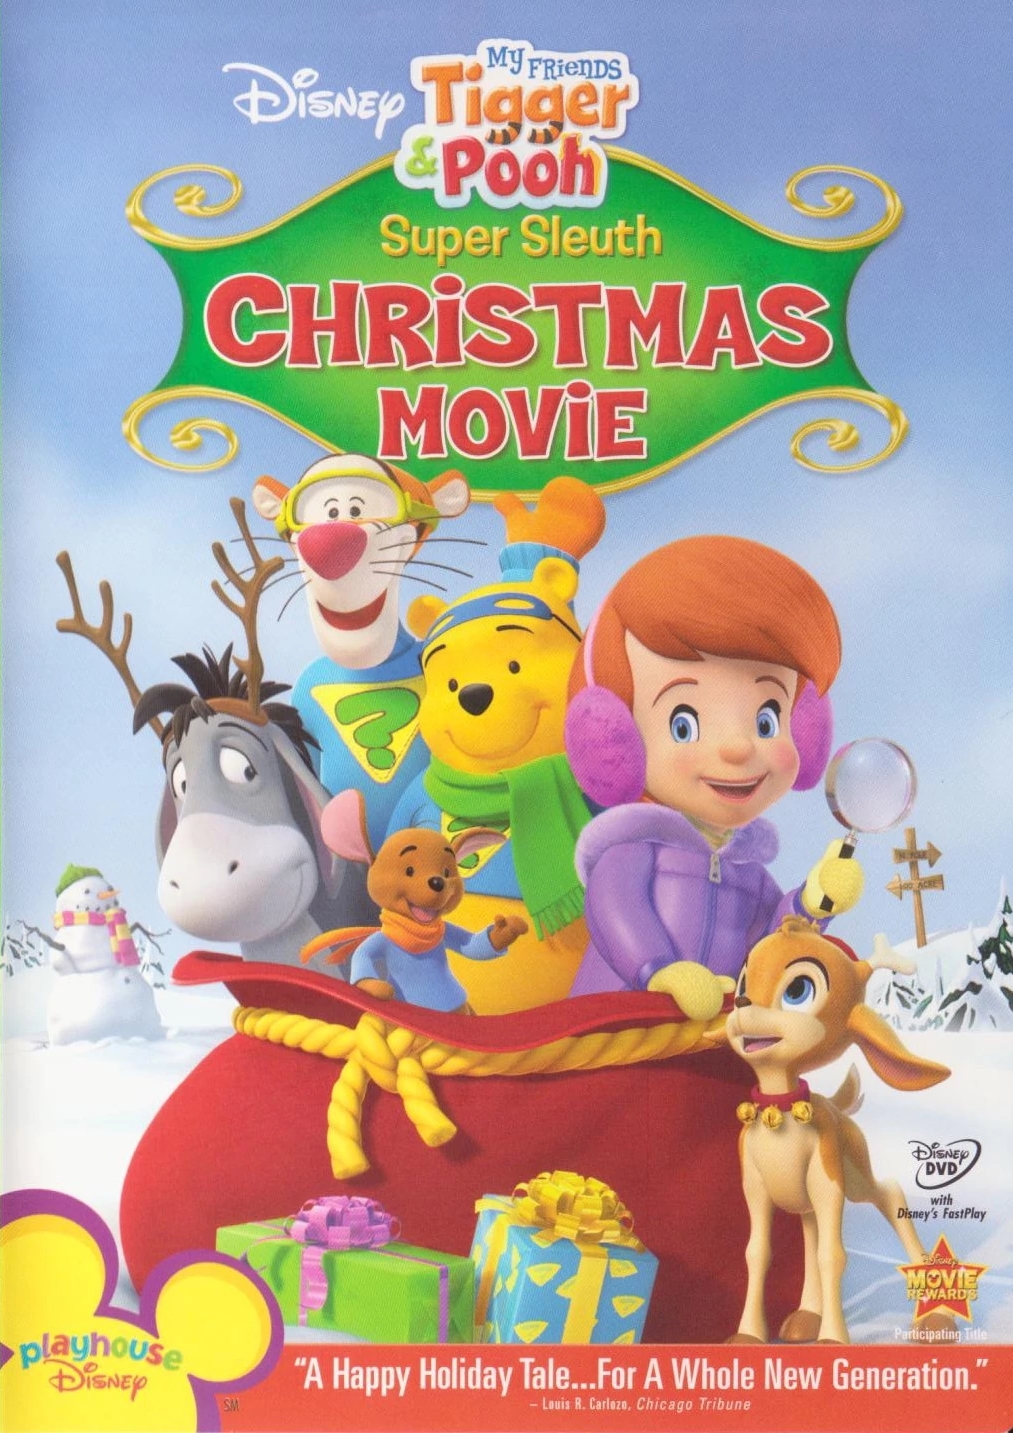 My Friends Tigger & Pooh – Super Sleuth Christmas Movie [2007] [DVDR] [NTSC] [Latino]